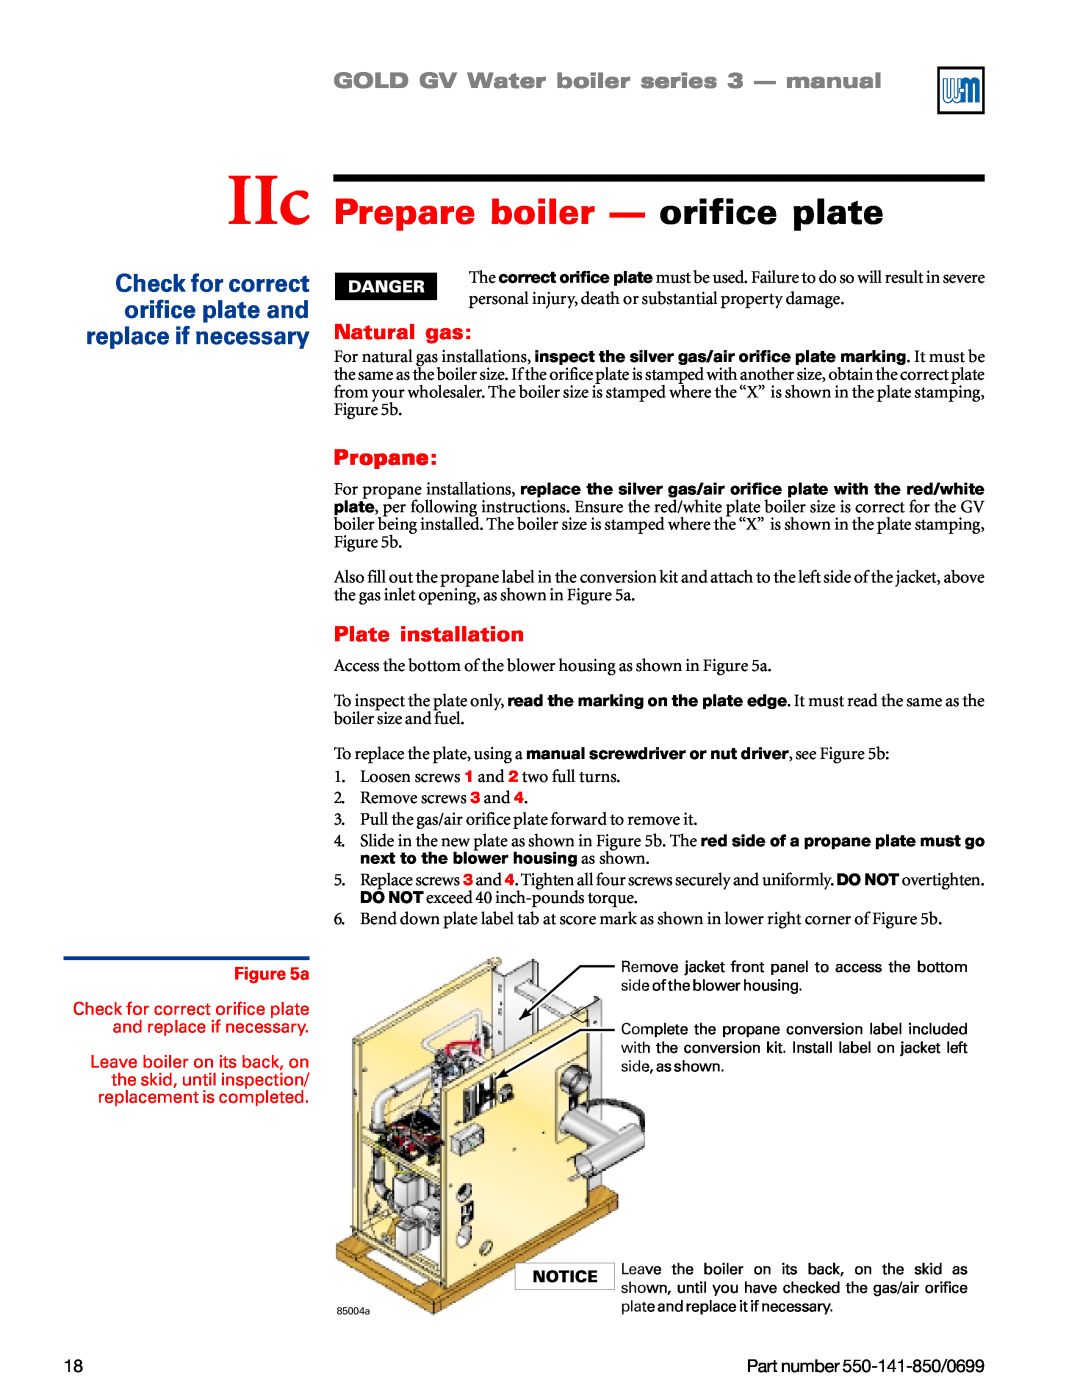 Weil-McLain GOLD DV WATER BOILER IIc Prepare boiler — orifice plate, GOLD GV Water boiler series 3 — manual, Natural gas 